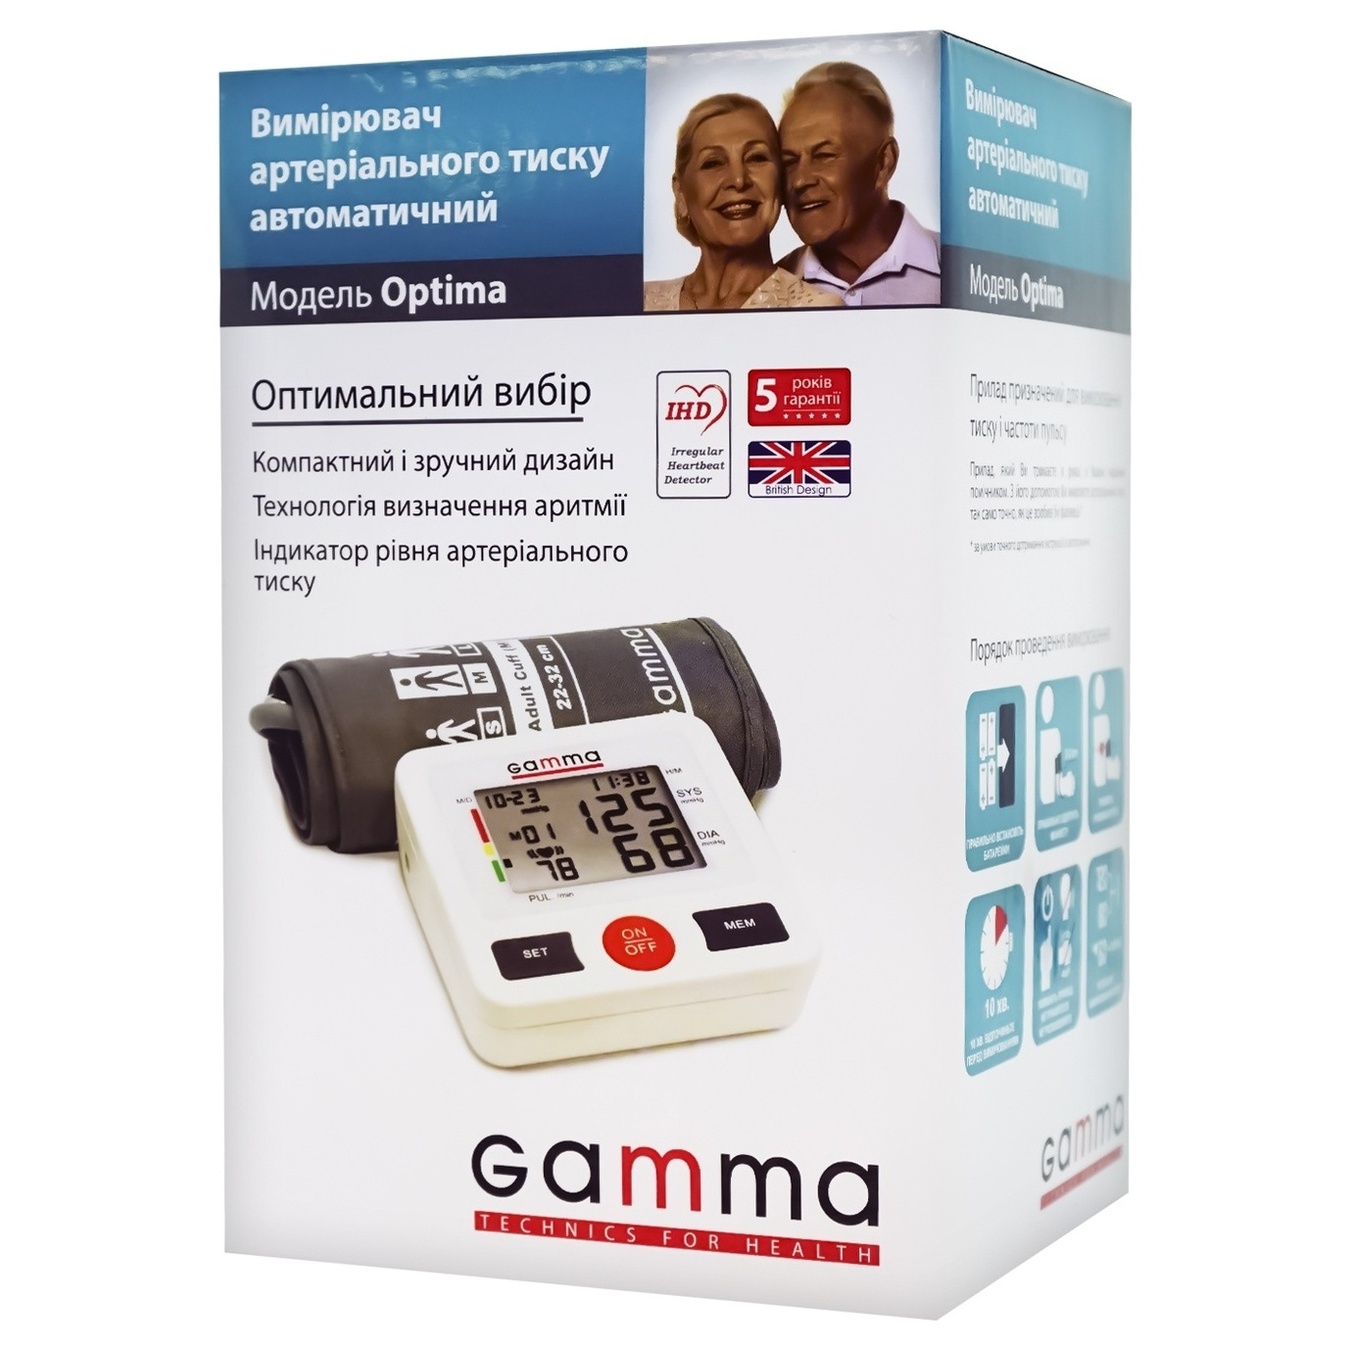 The tonometer Gamma Optima is automatic